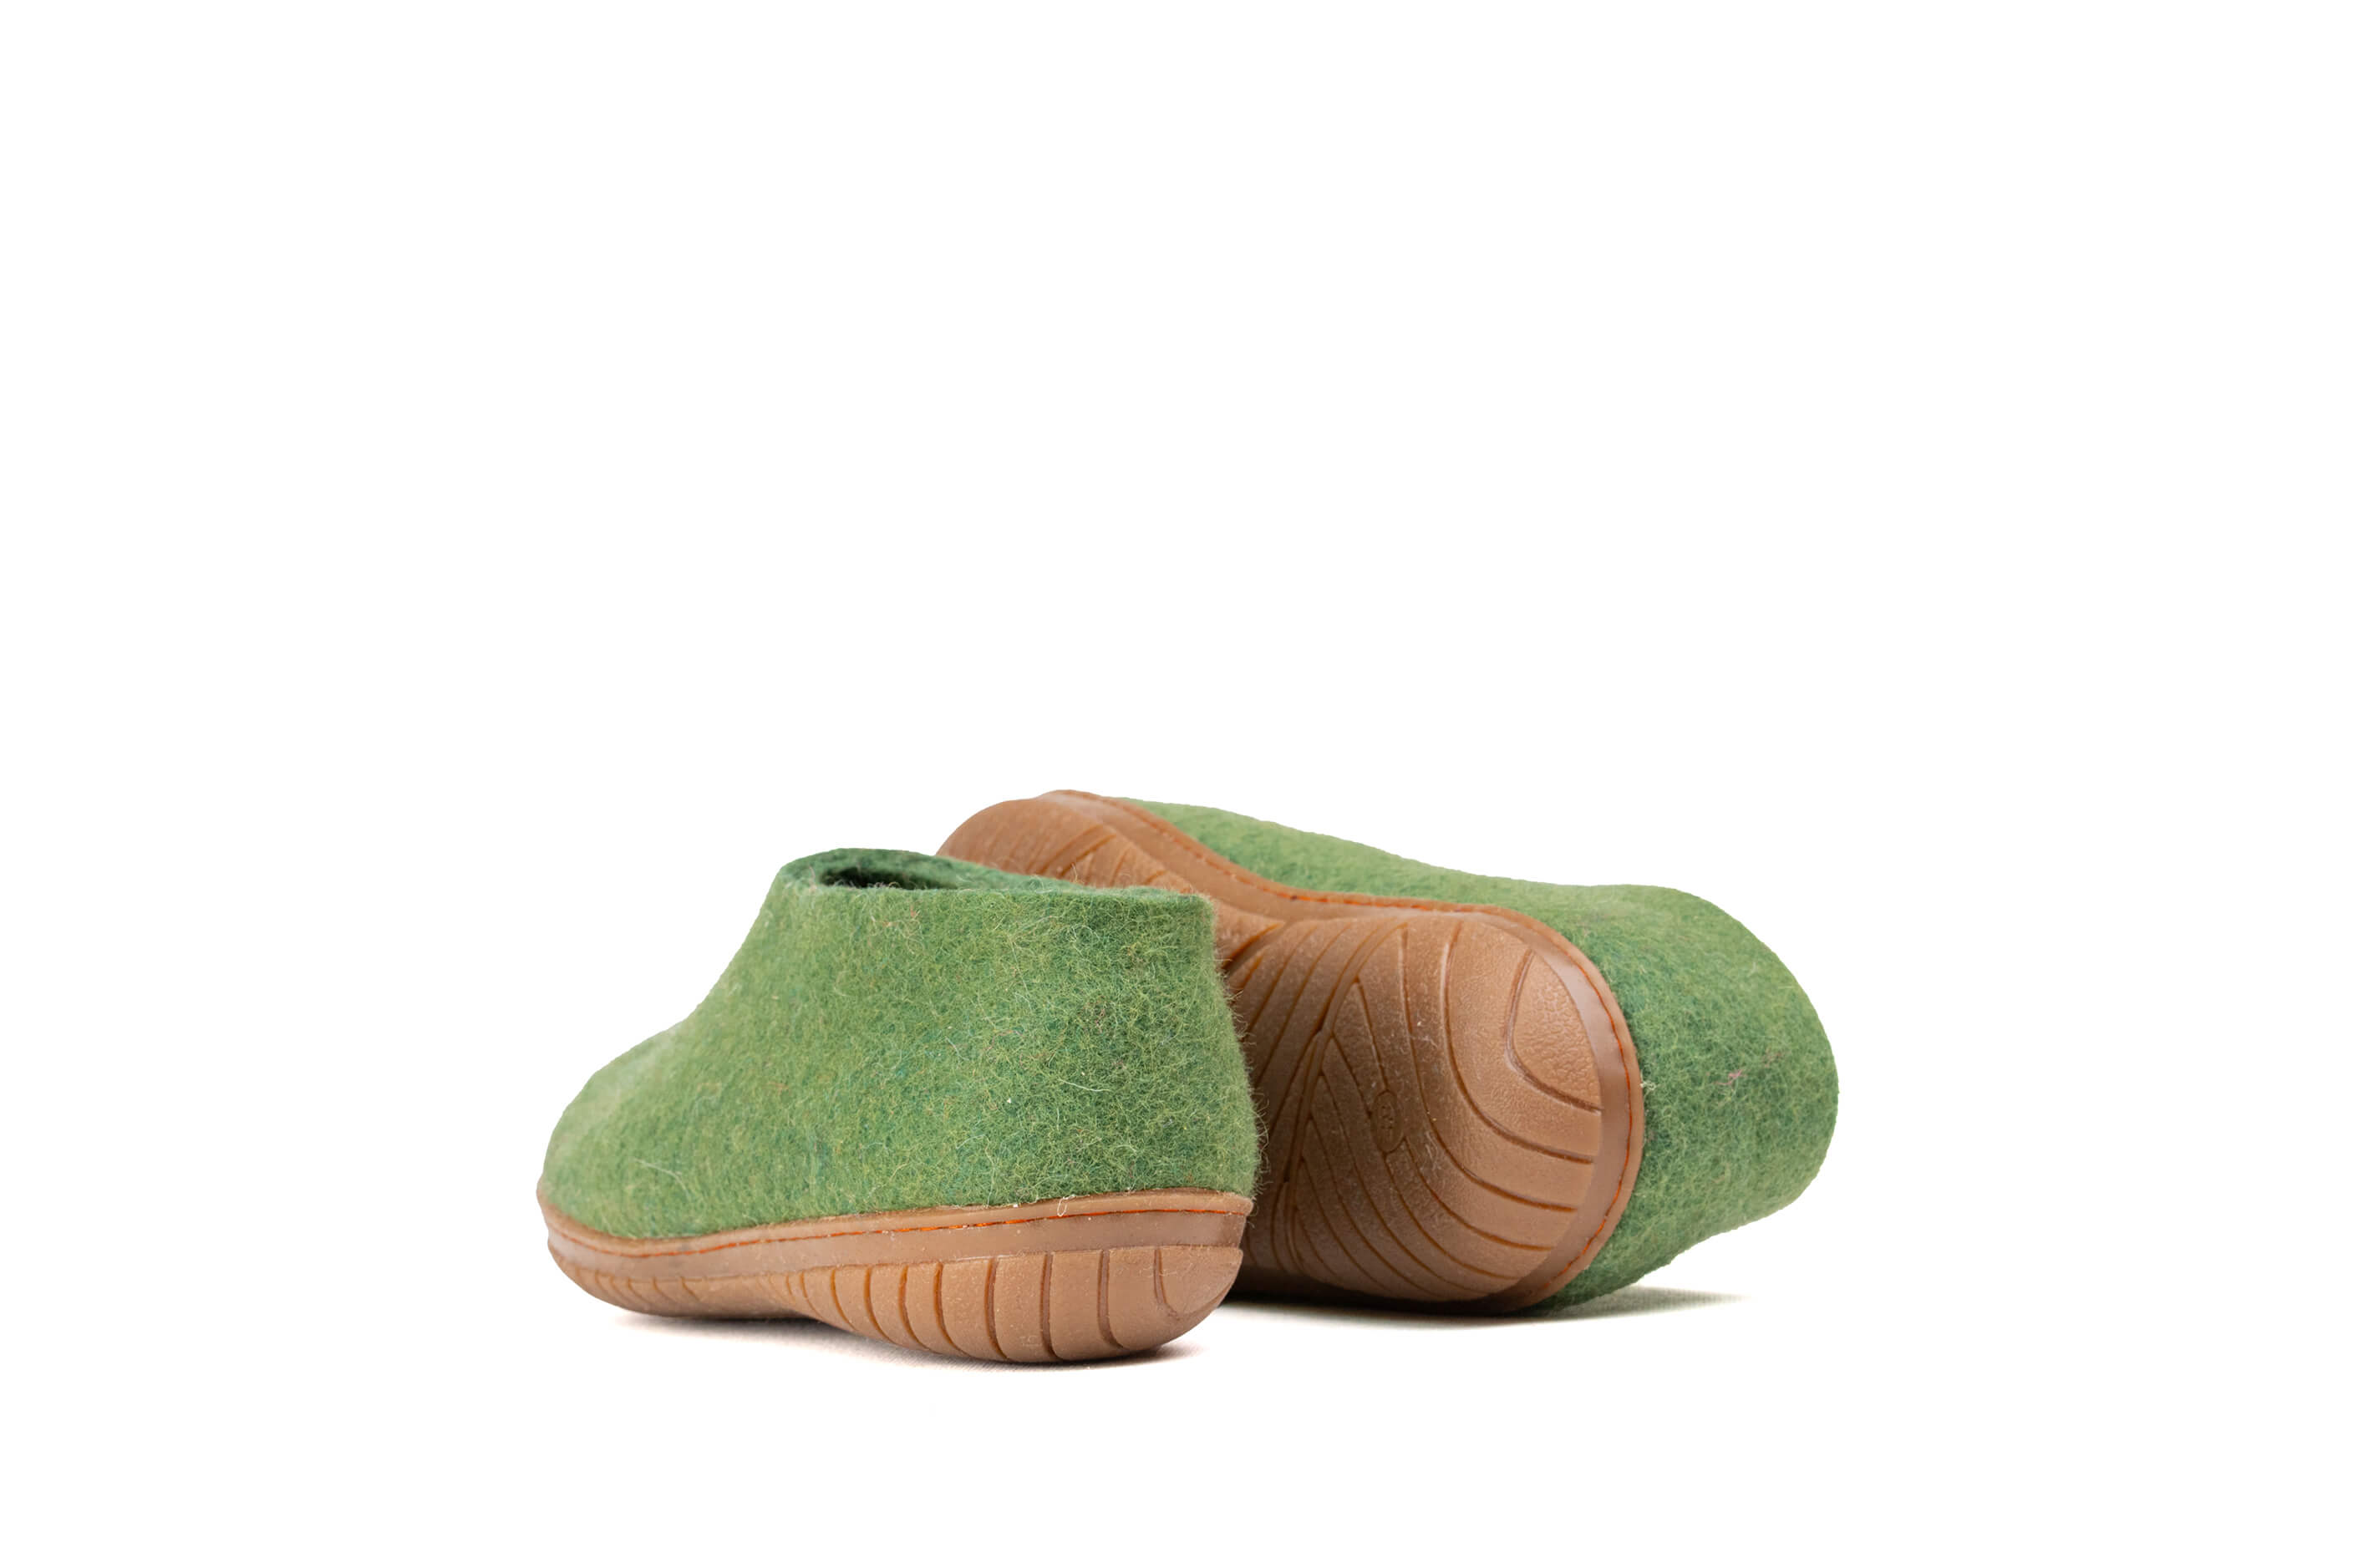 Chaussures outdoor avec semelle en caoutchouc - Vert